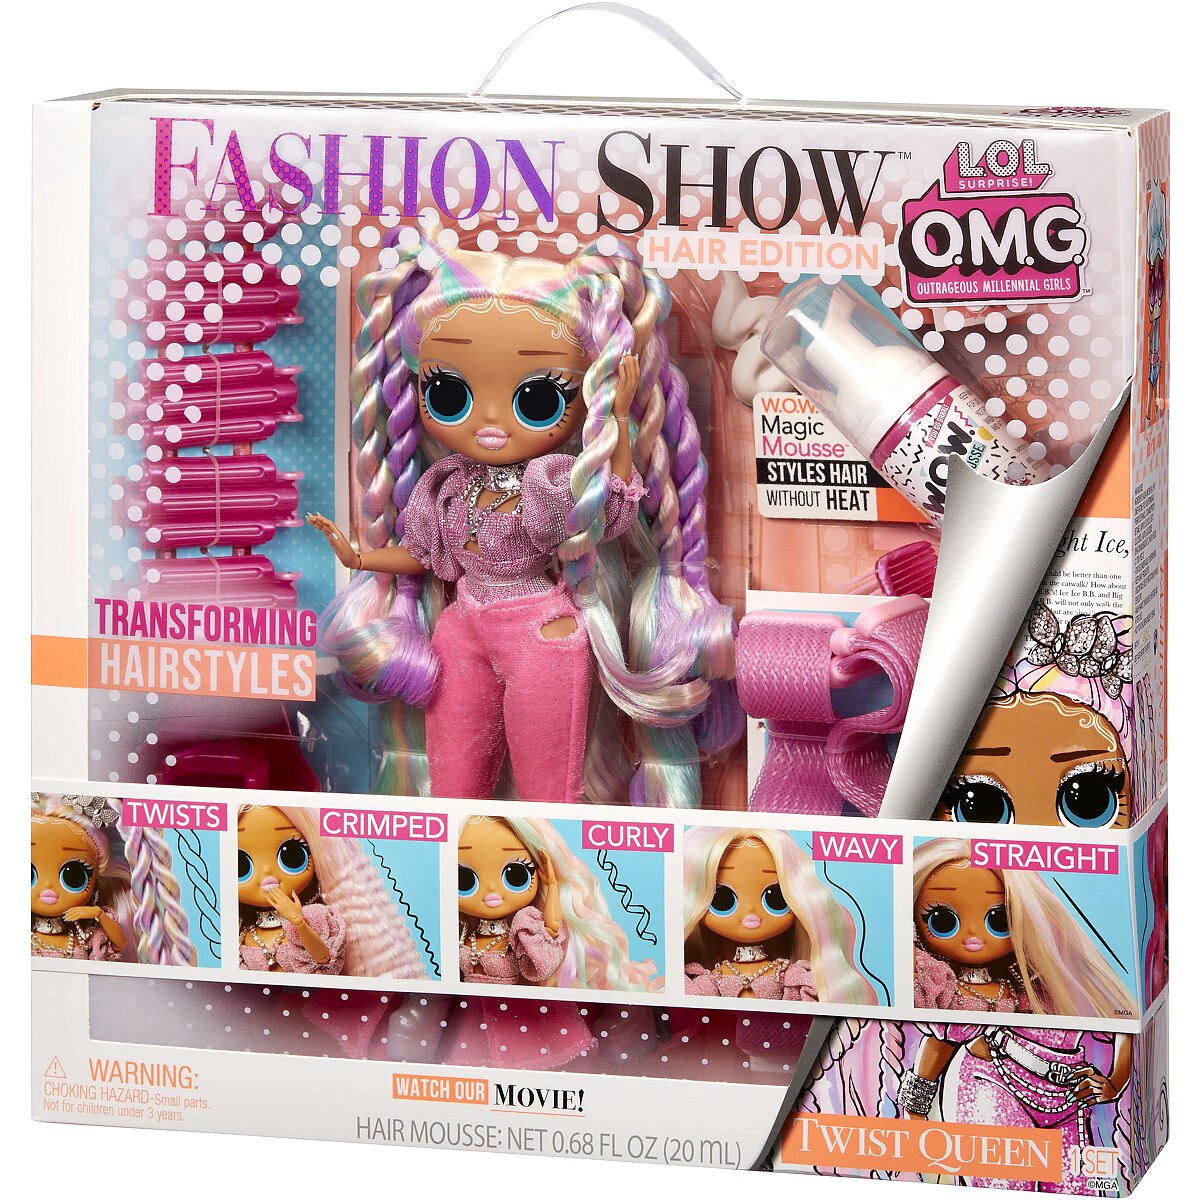 L.O.L. Surprise! OMG Fashion Show Hair Edition - Twist Queen